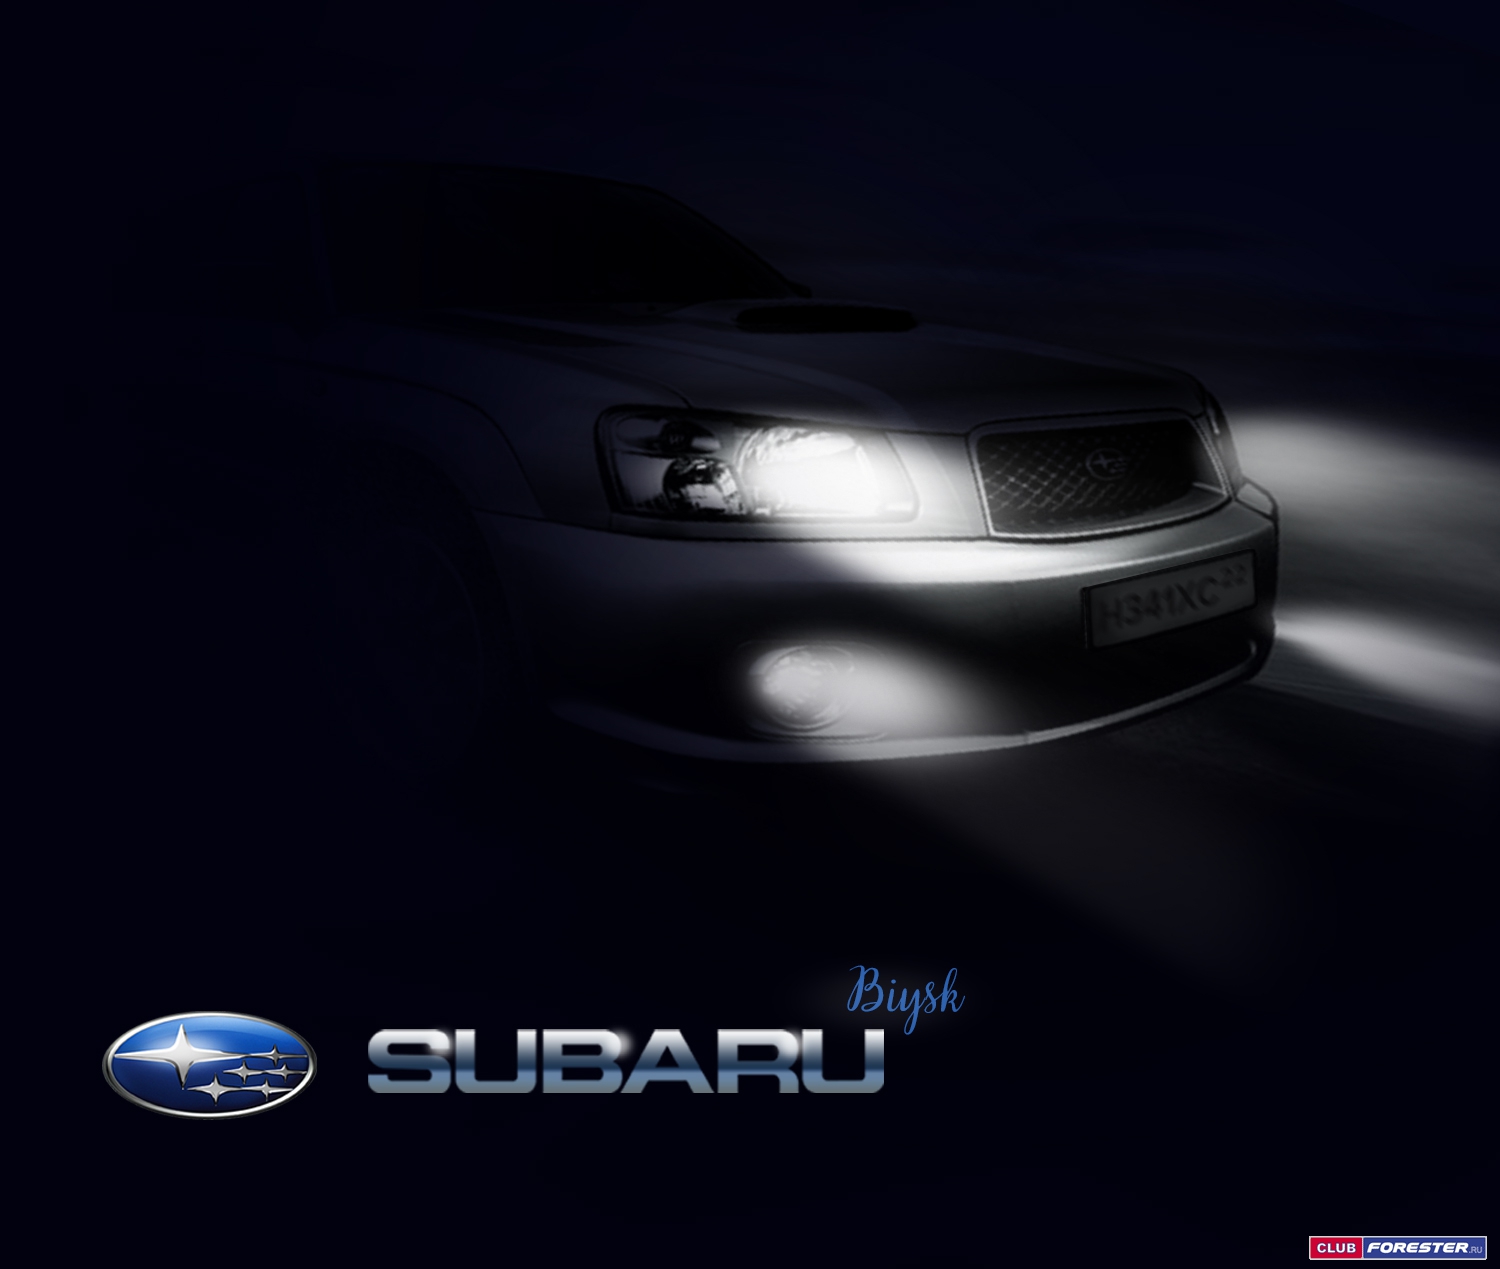 Subaru biysk